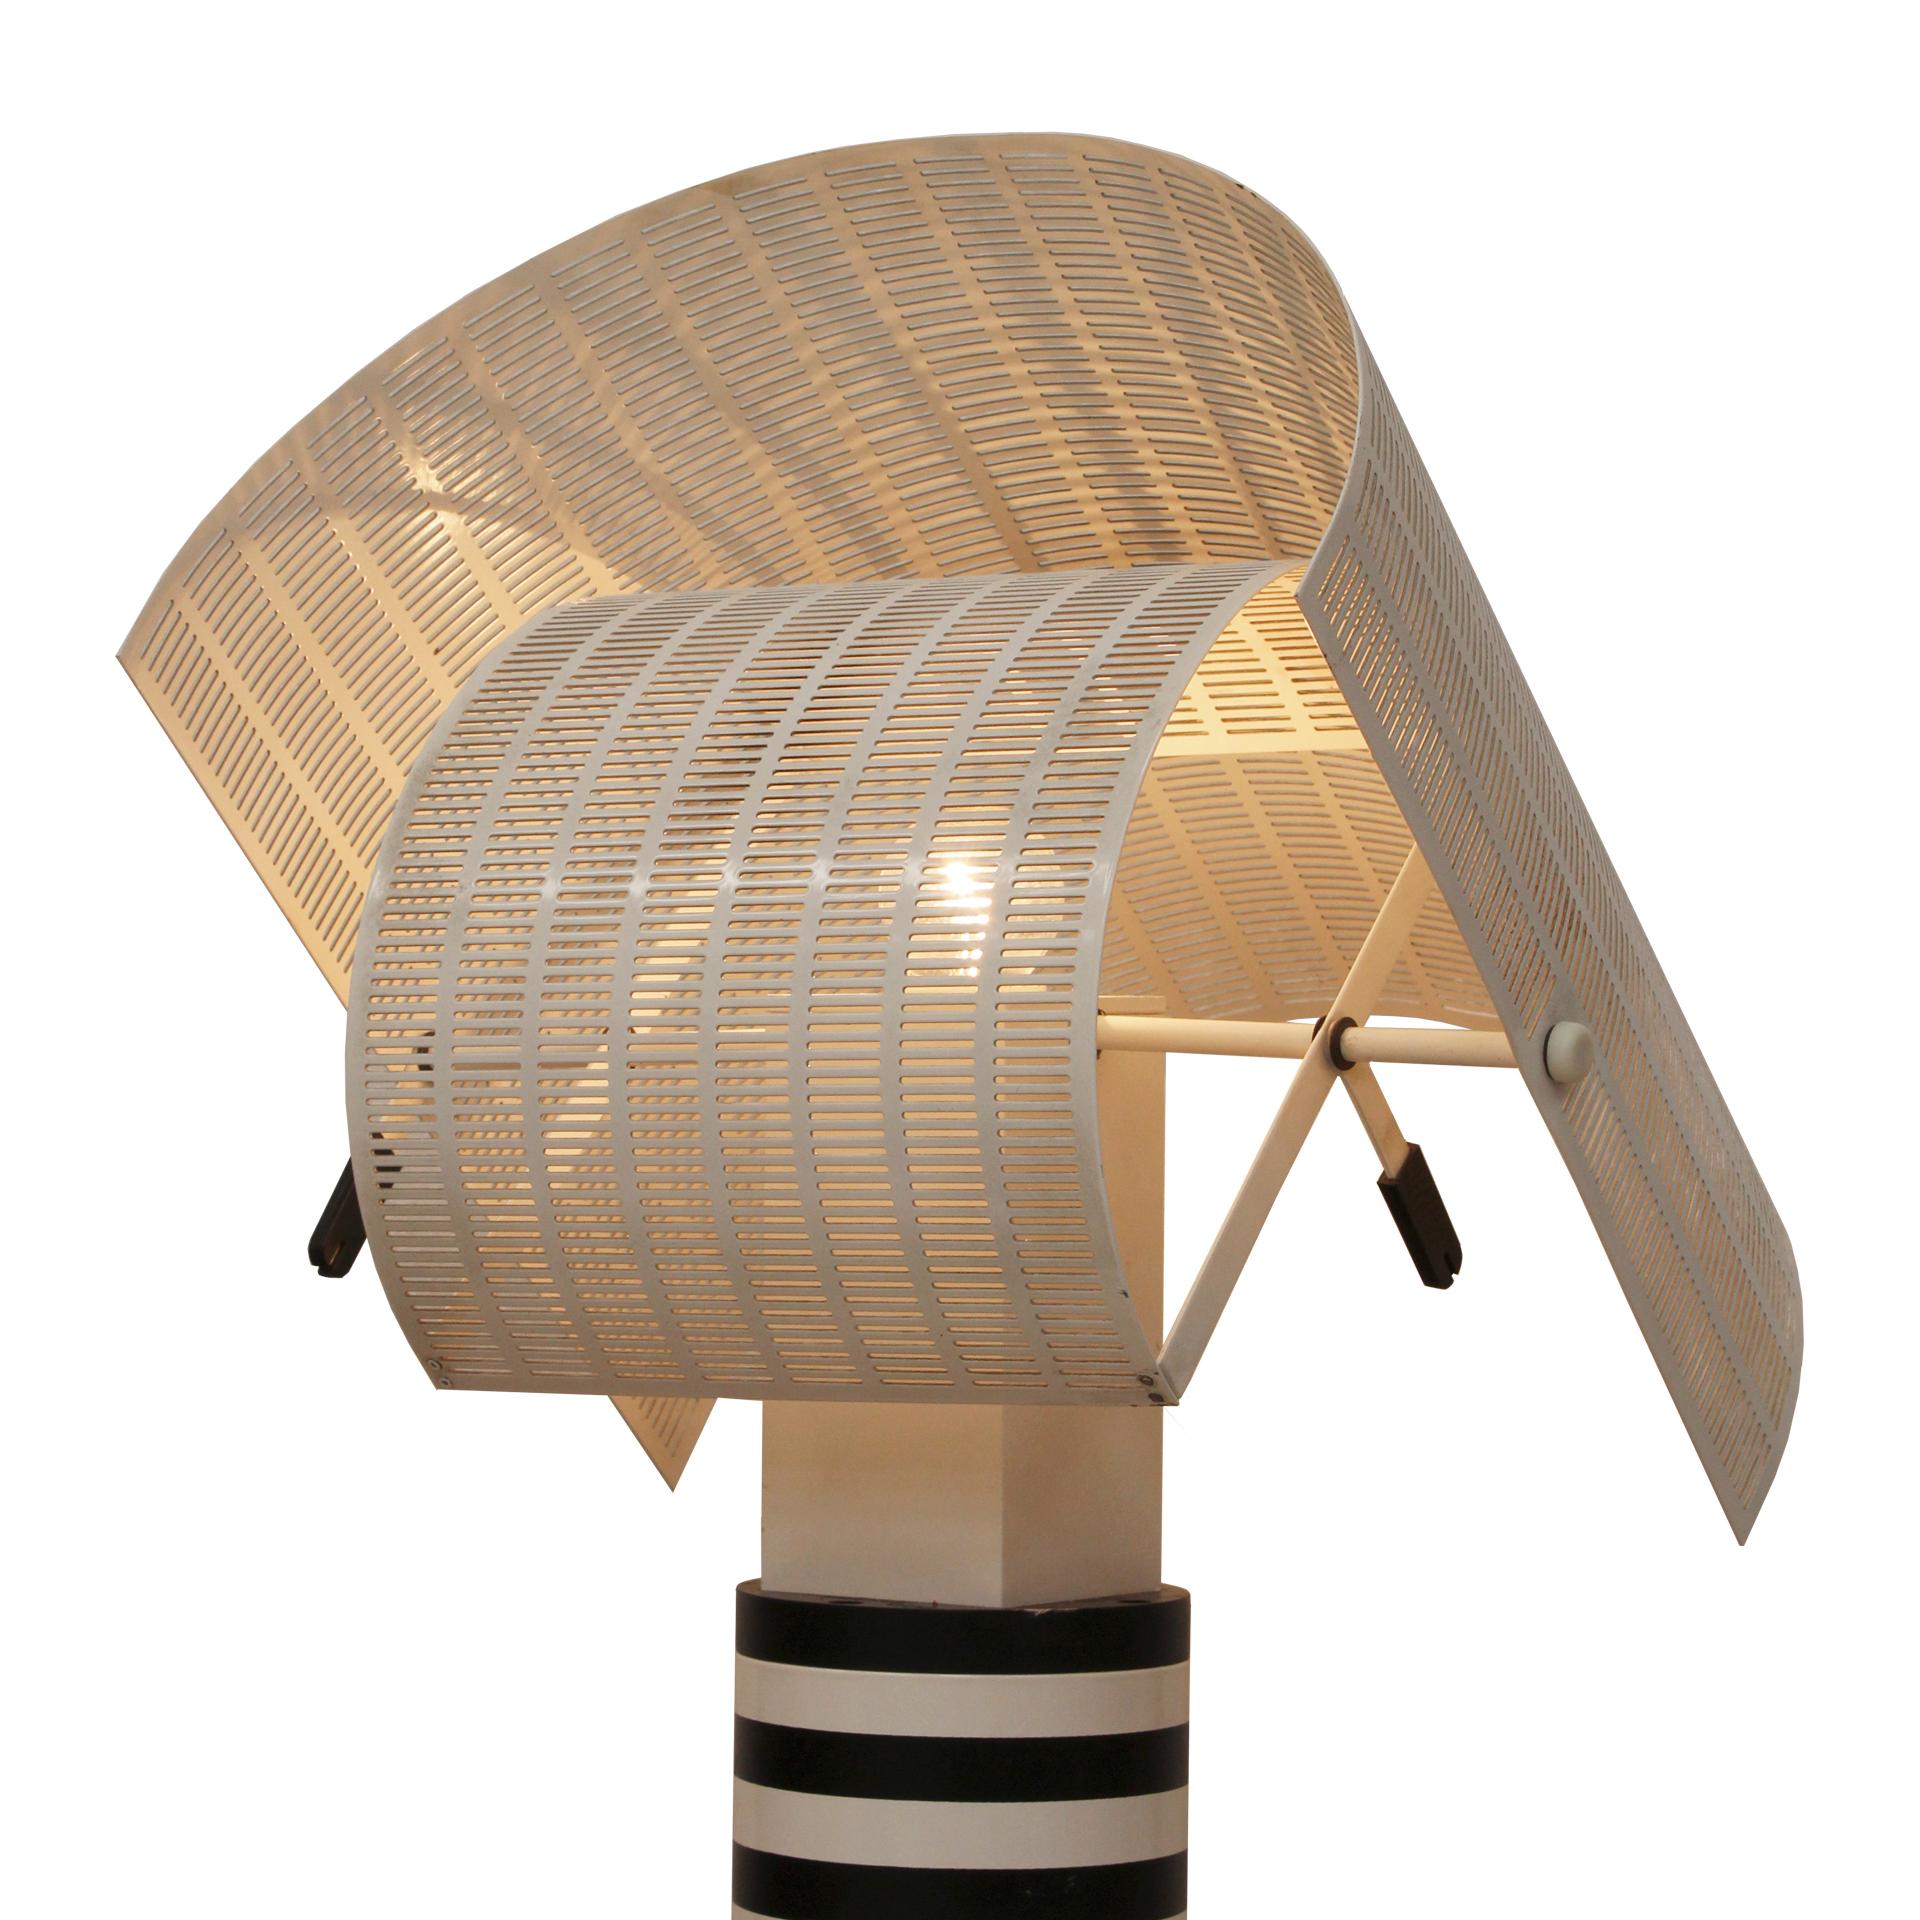 Italian Mid-Century Modern Mod. Shogun Table Lamp Designed by Mario Botta for Artemide For Sale